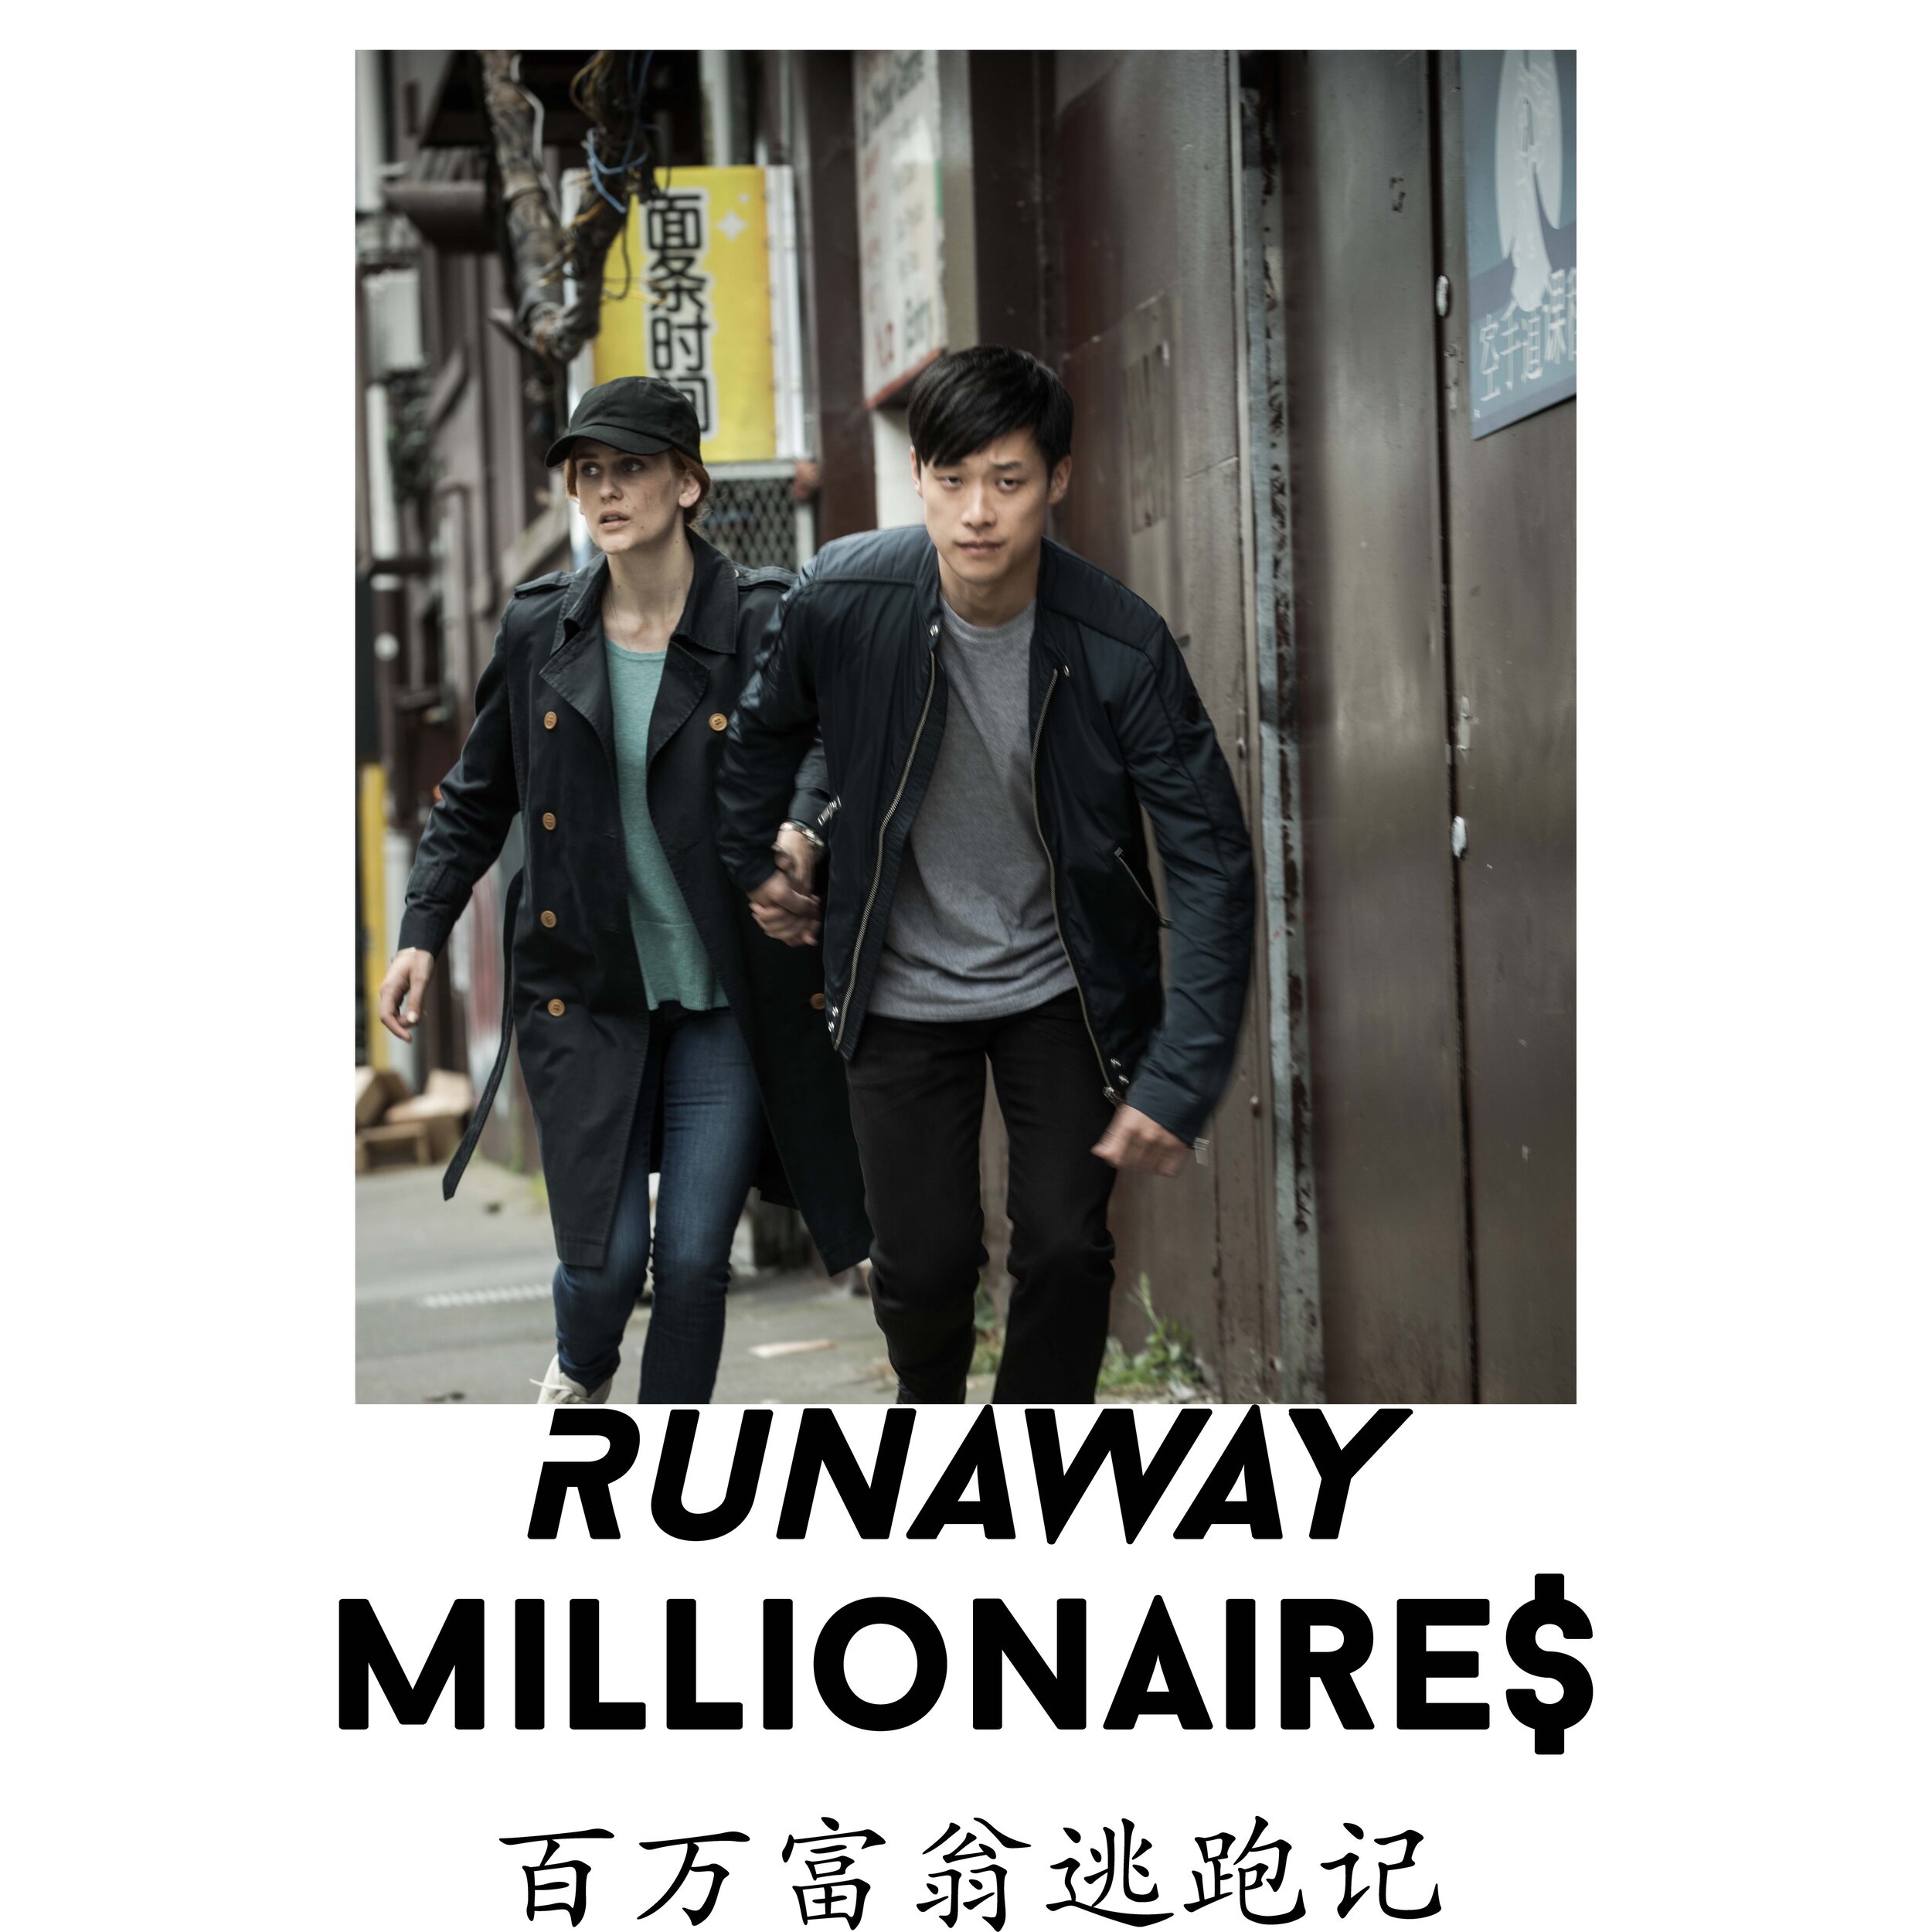 Runaway Millionaires // Unit Publicity & PR campaign support